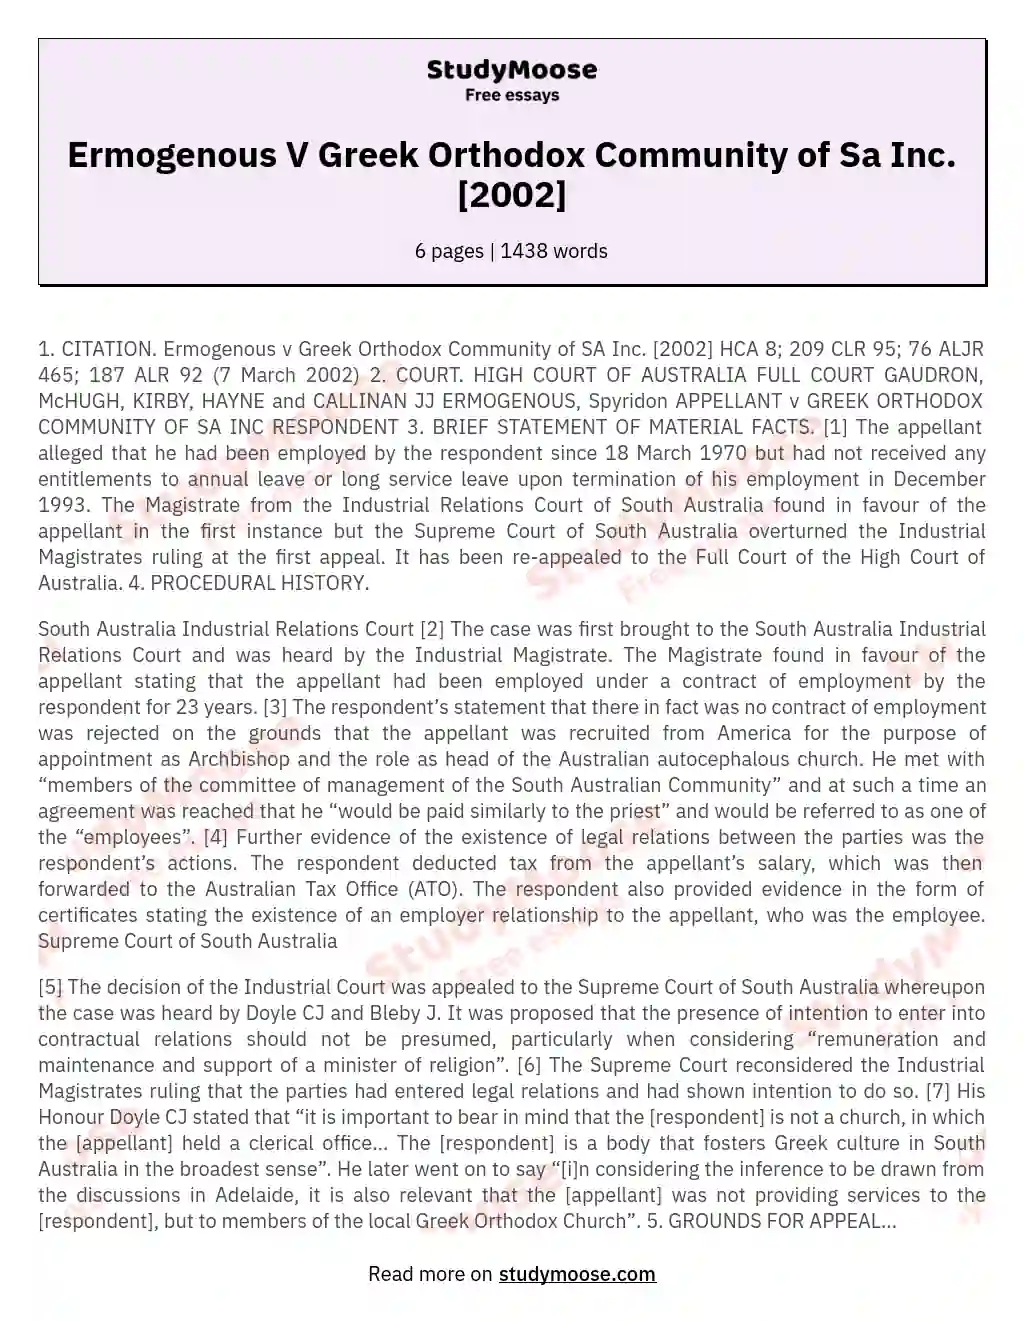 Ermogenous V Greek Orthodox Community of Sa Inc. [2002] essay